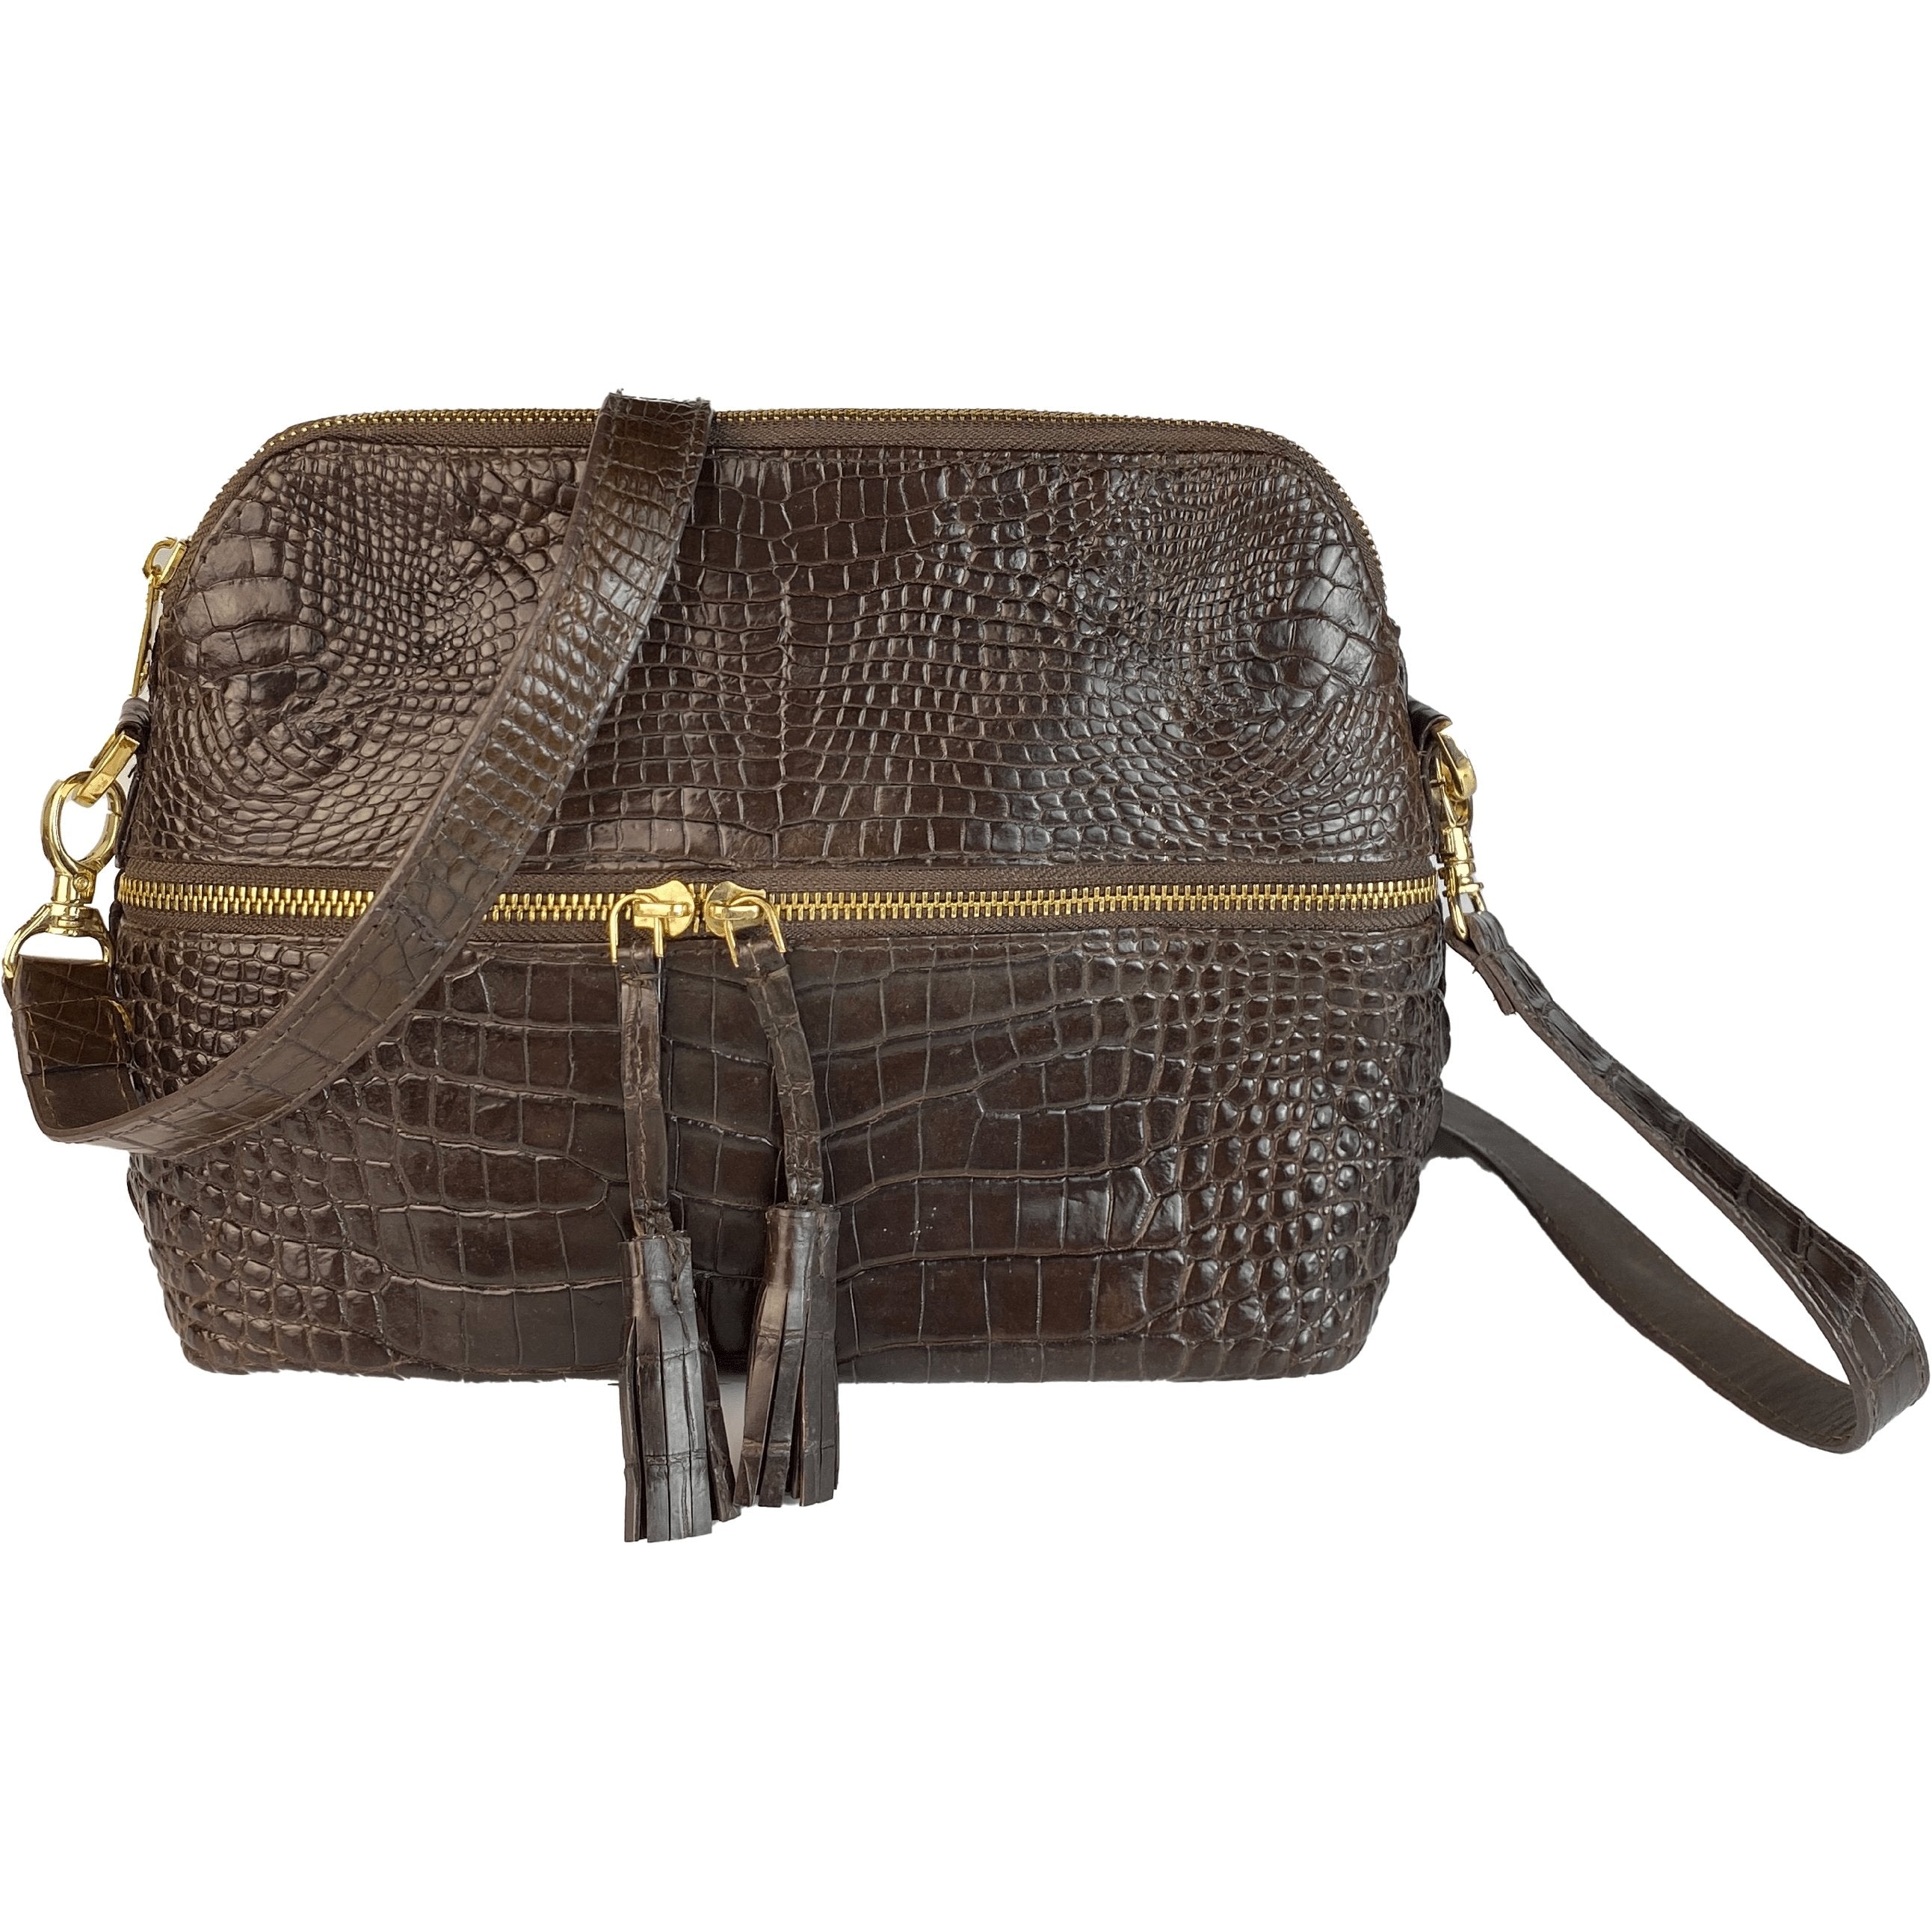 Junior 4Pcs/Set Women Handbag PU Leather Tote Bag Shoulder Bags Satchel  Purse Set Brown - Walmart.com